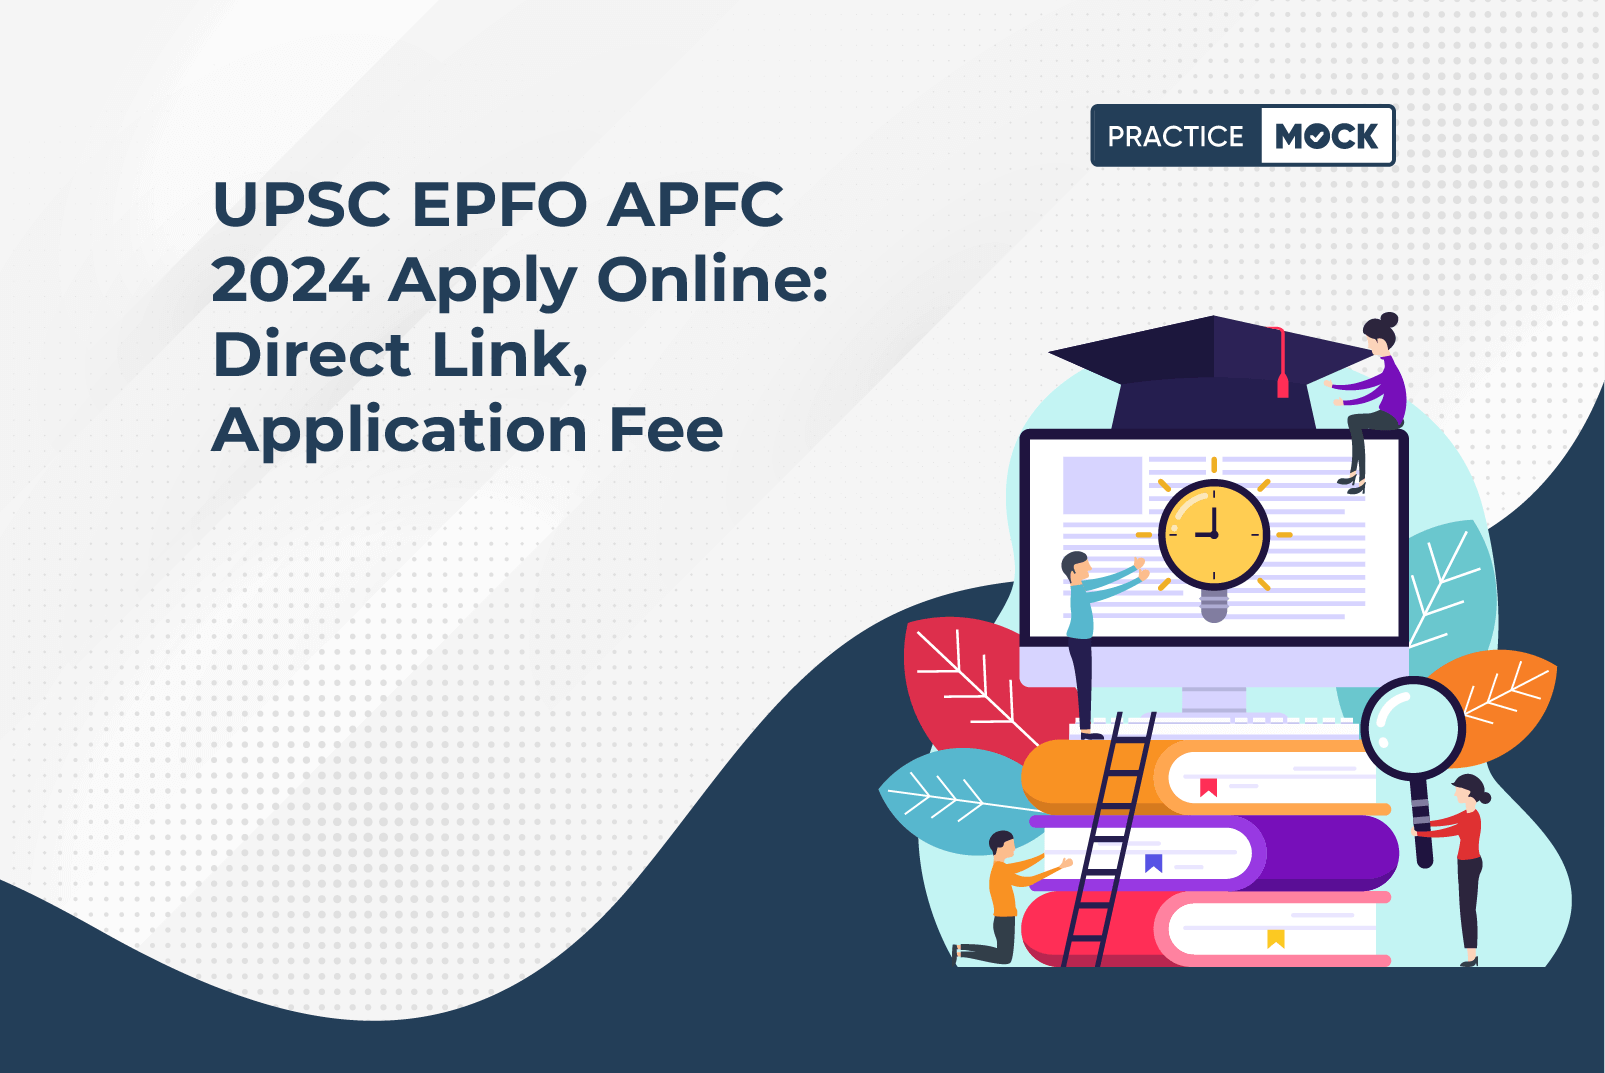 UPSC EPFO APFC 2024 Apply Online